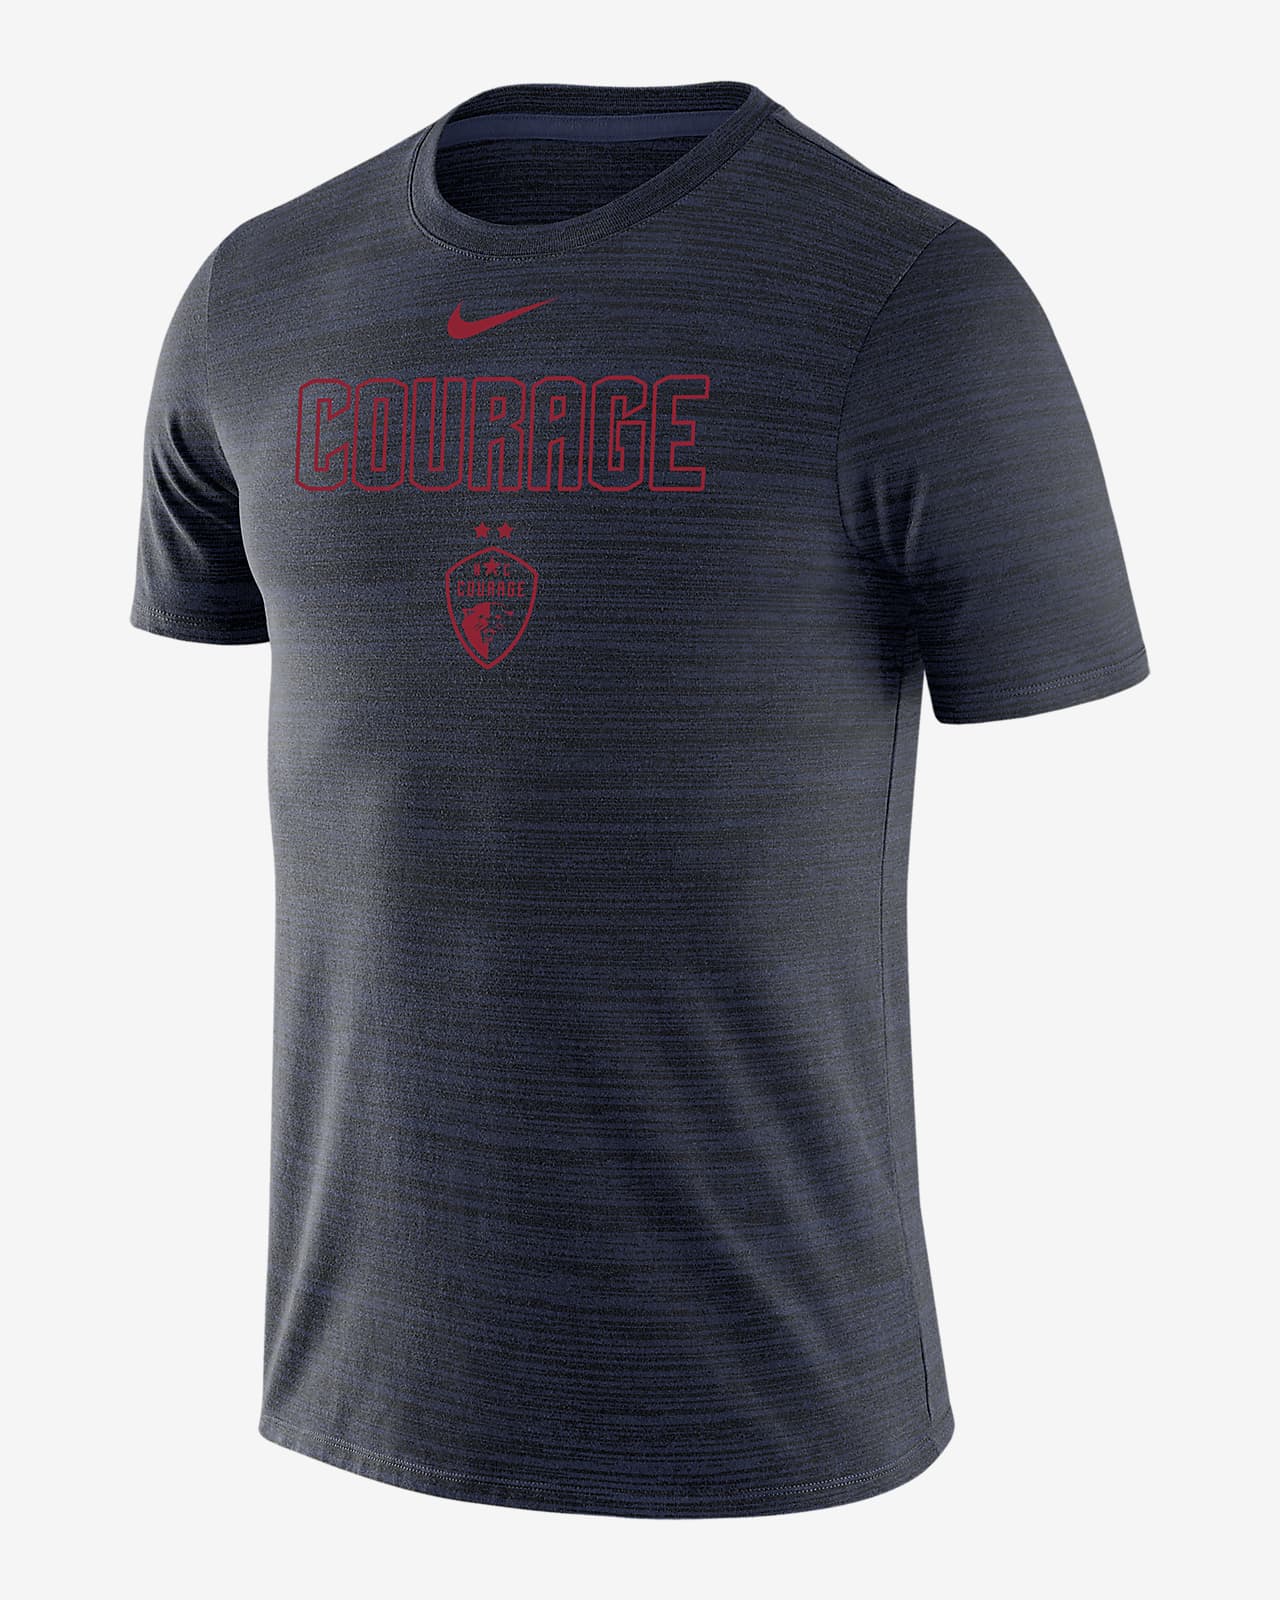 North Carolina Courage Velocity Legend Men's Nike Soccer T-Shirt